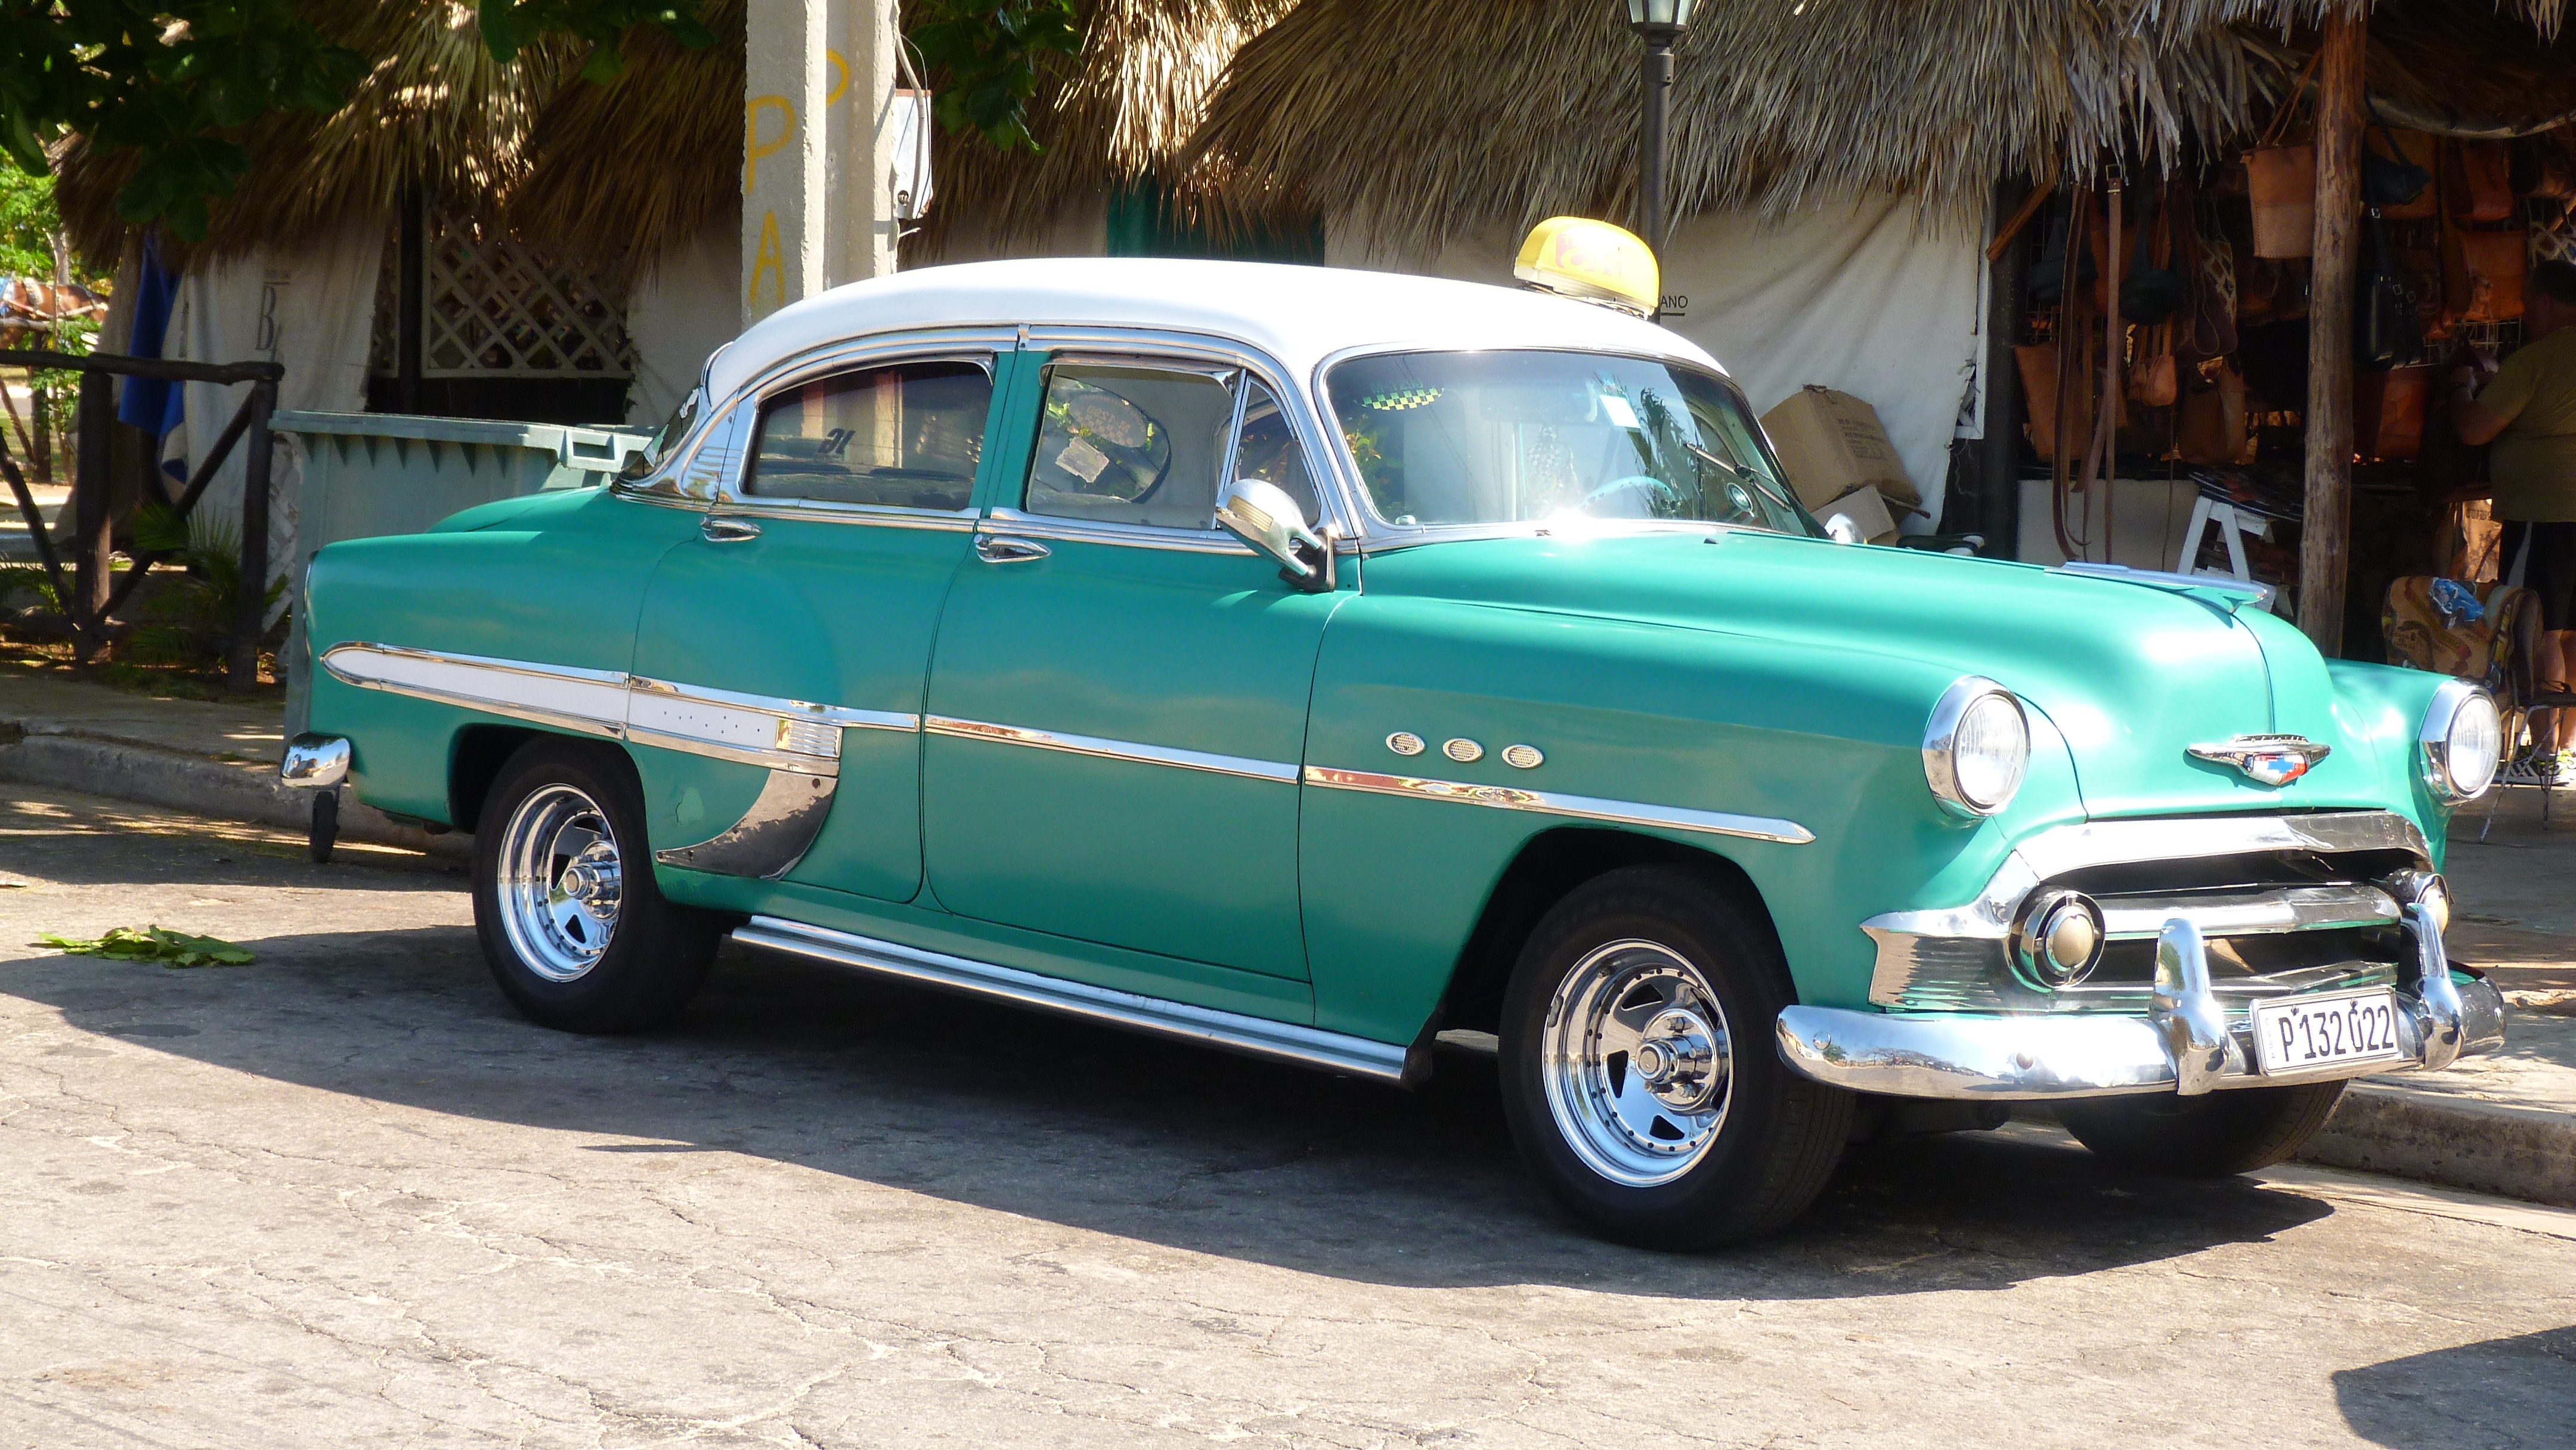 Бесплатное фото Ретро автомобиль Chevrolet на Кубе